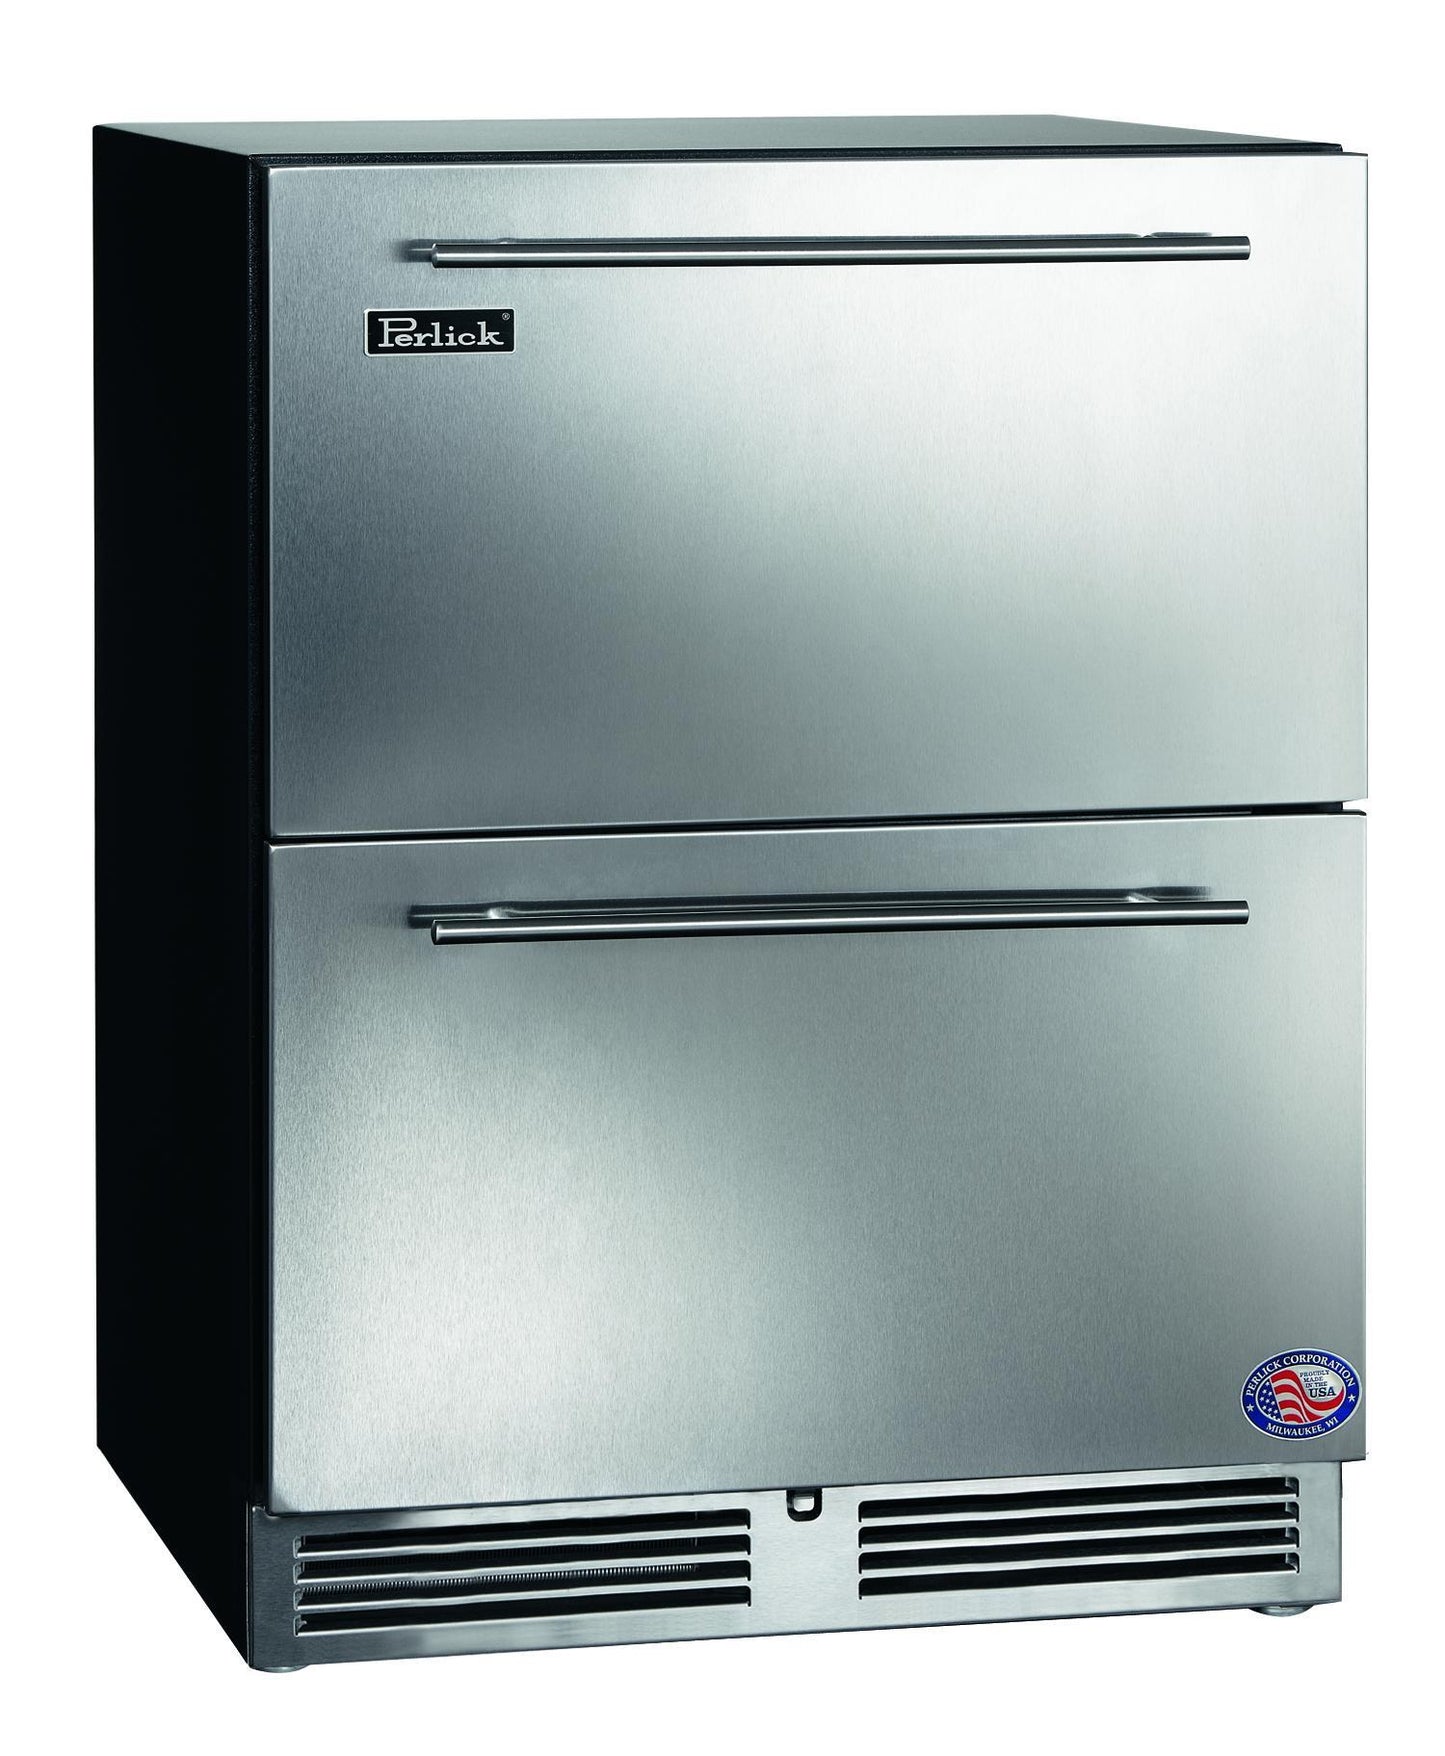 Perlick HA24FB45 24" Ada Compliant Freezer Drawers